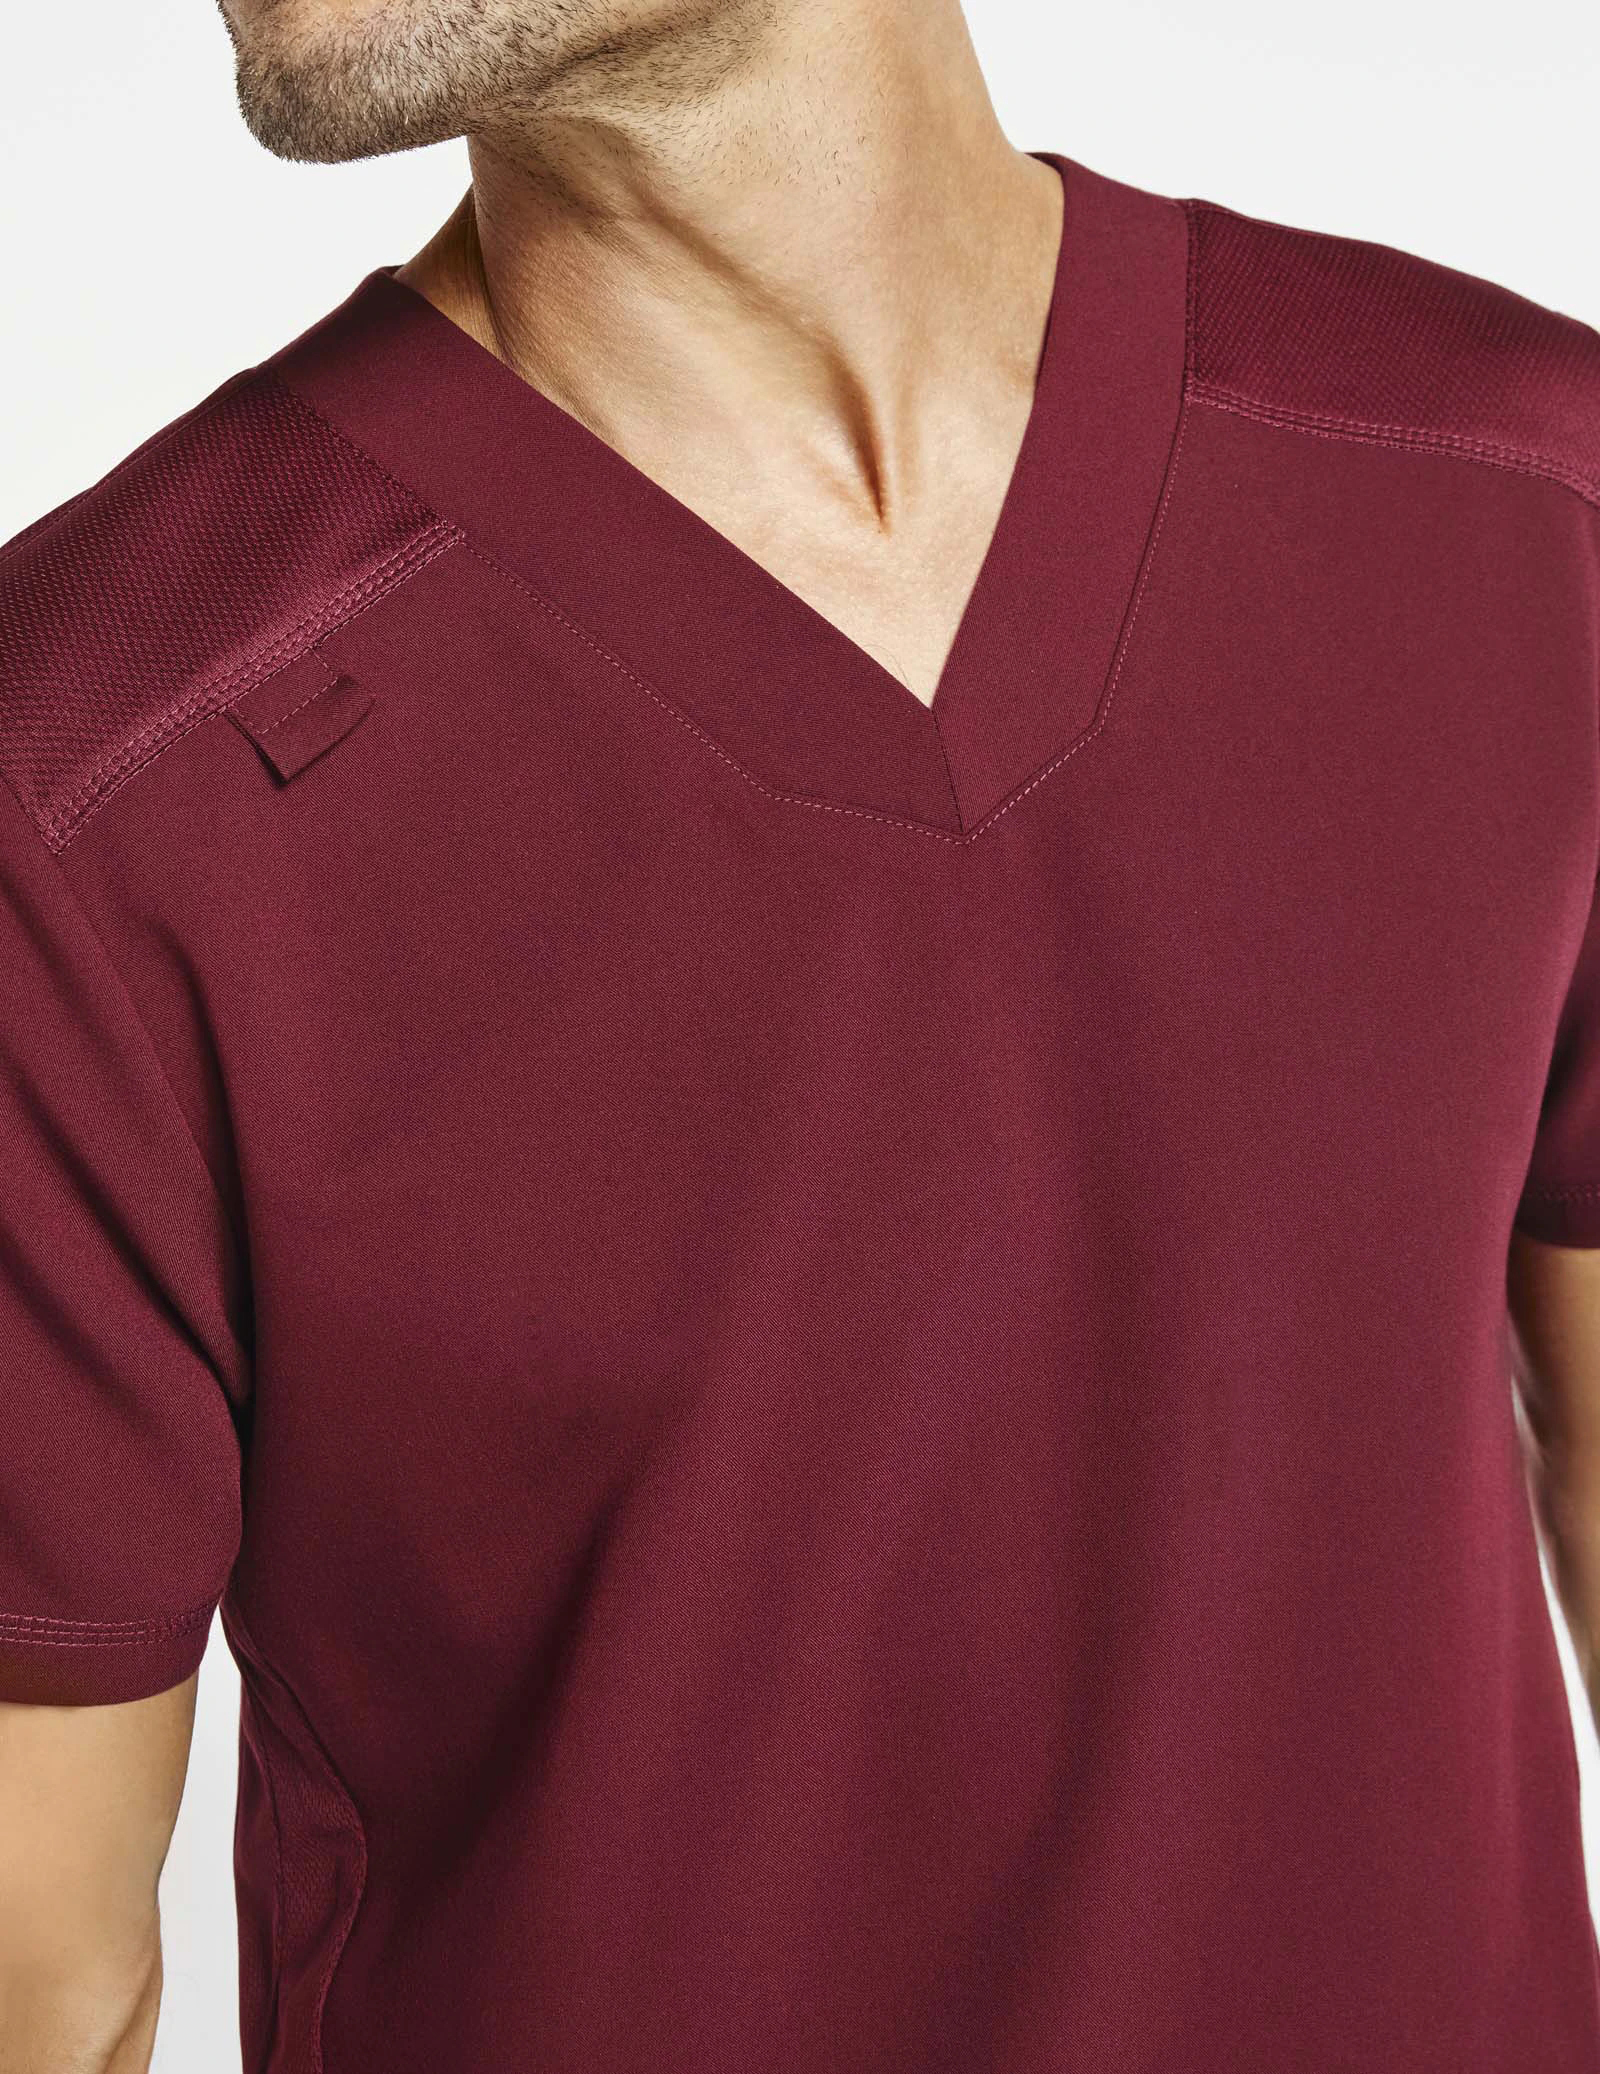 Custom Poylester/Cotton/Rayon/Spandex Medical Hospital Scrubs Uniforms Sets With 4 Pockets